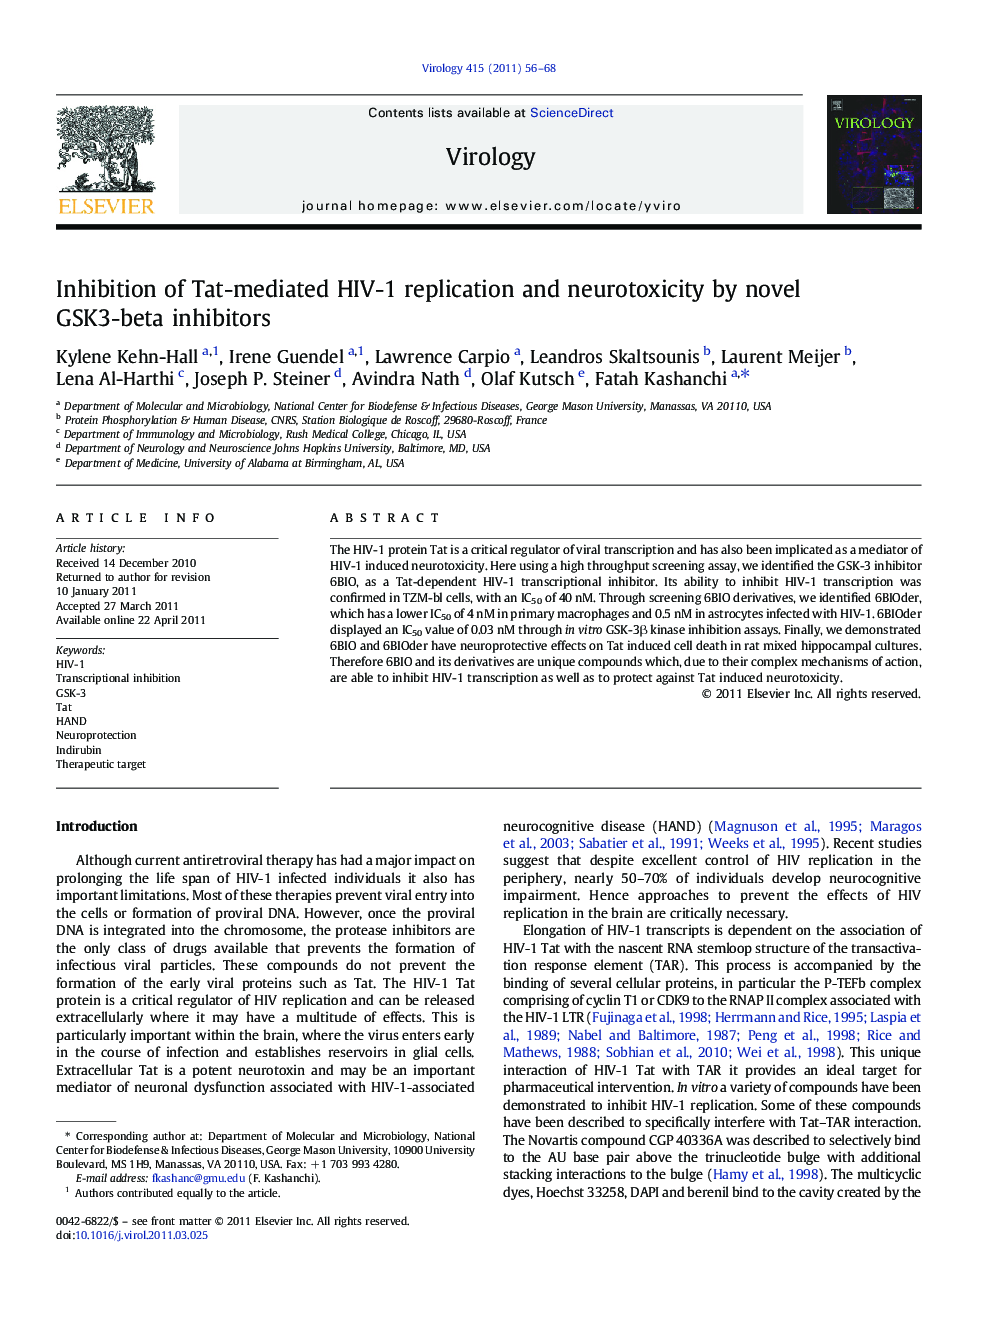 Inhibition of Tat-mediated HIV-1 replication and neurotoxicity by novel GSK3-beta inhibitors